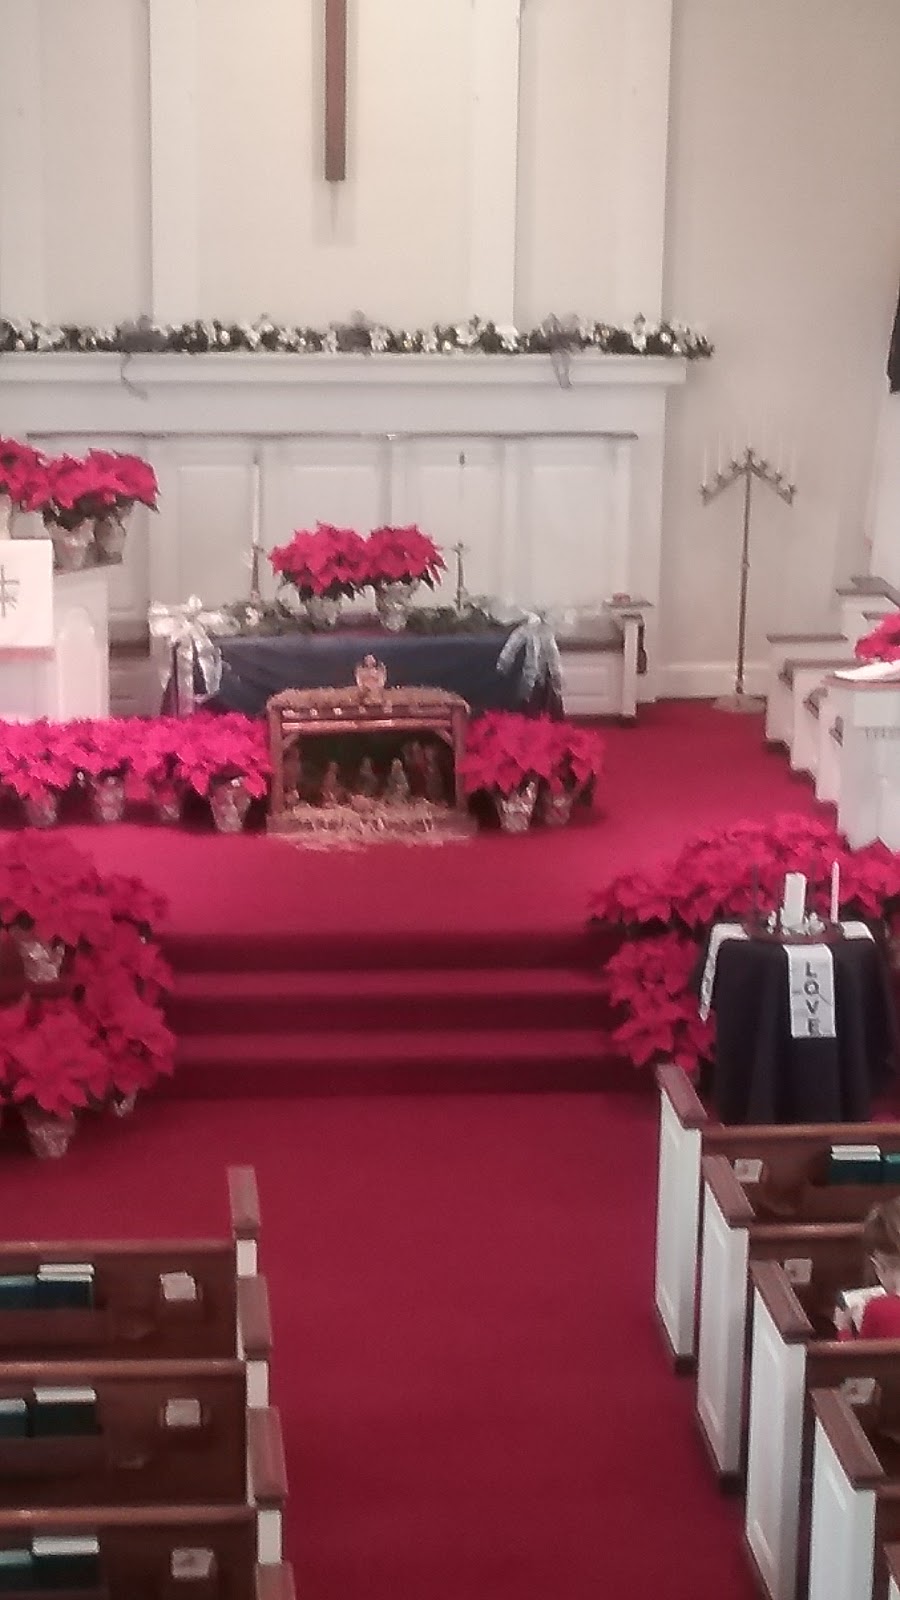 Old Greenwich Presbyterian Church | 17 Greenwich Church Rd, Stewartsville, NJ 08886 | Phone: (908) 479-4449